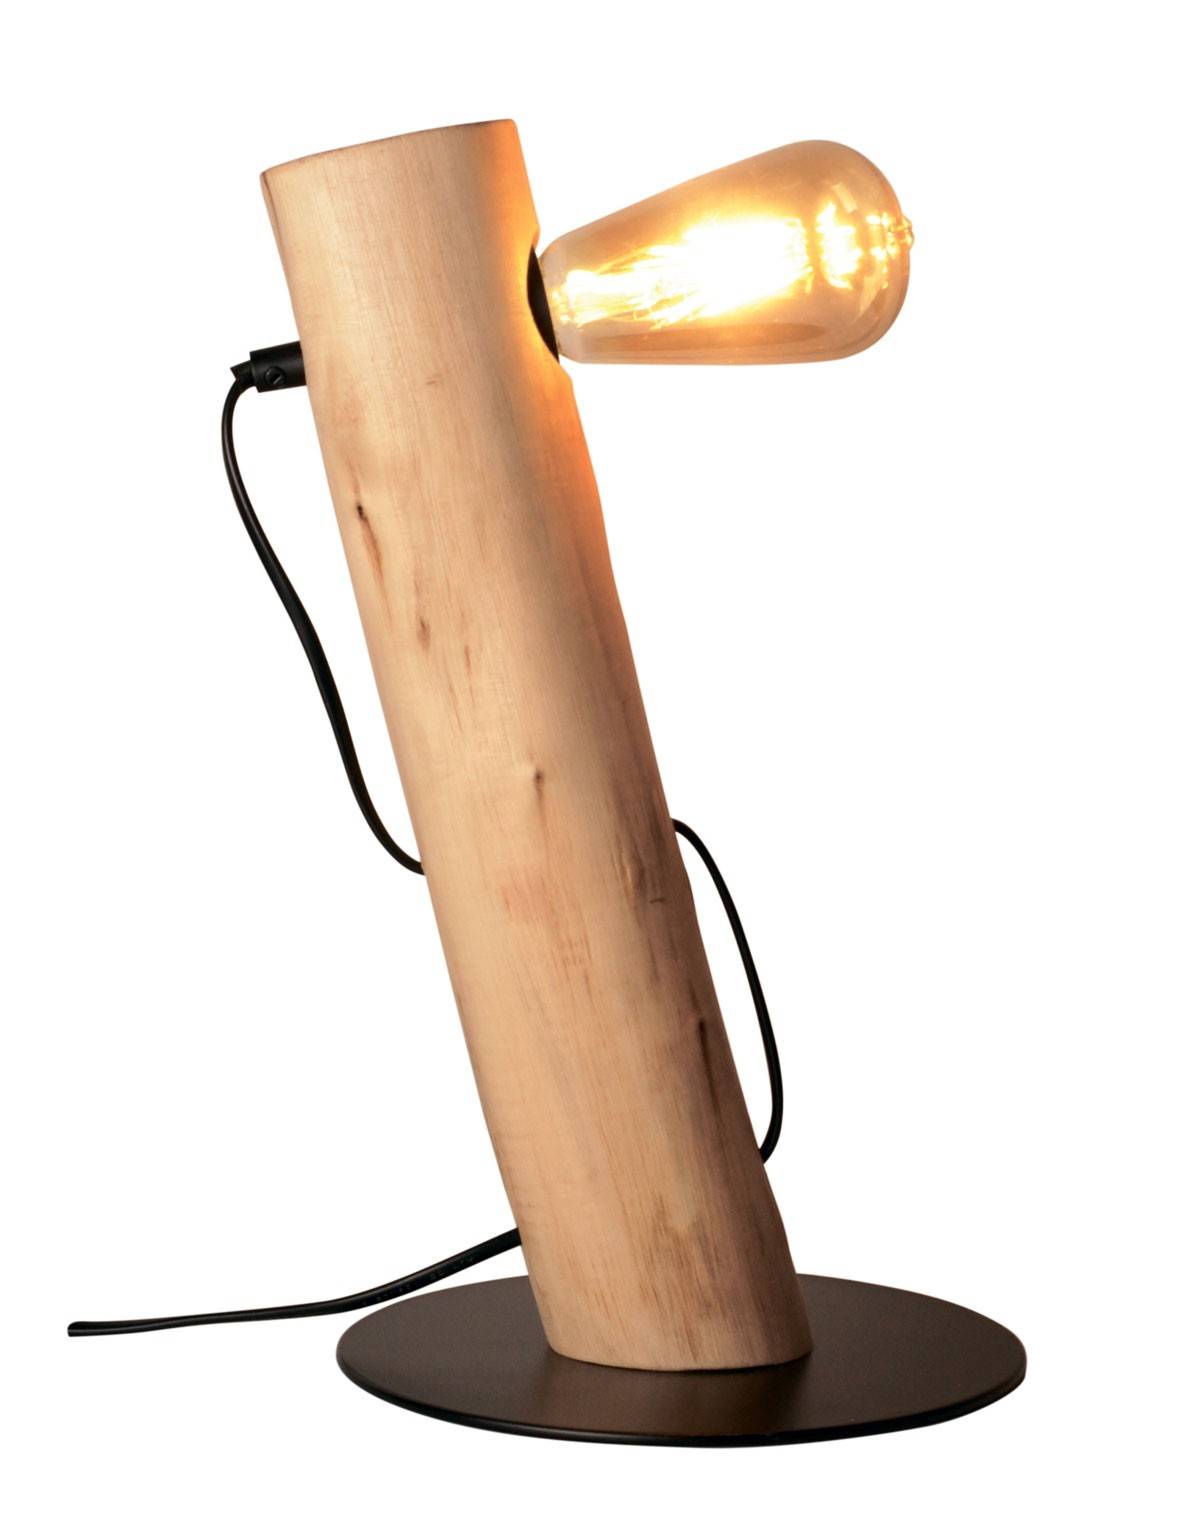 Designer-Tischlampen aus E27 Holztischlampe - Holz